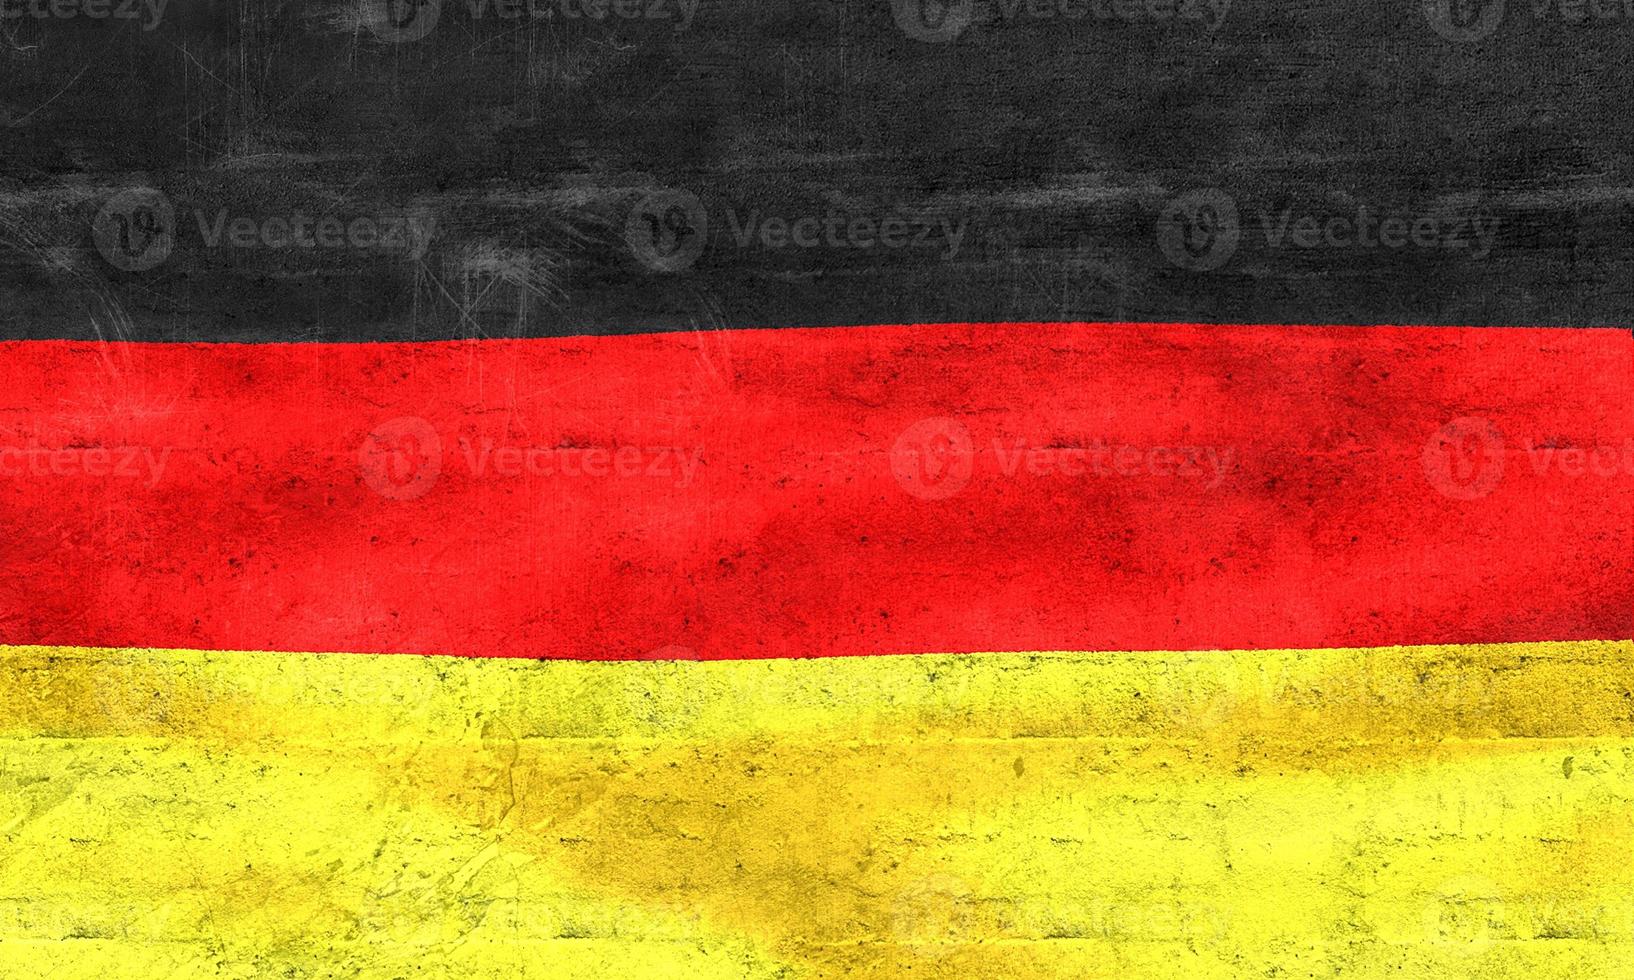 tyska flaggan - realistiskt viftande tygflagga foto